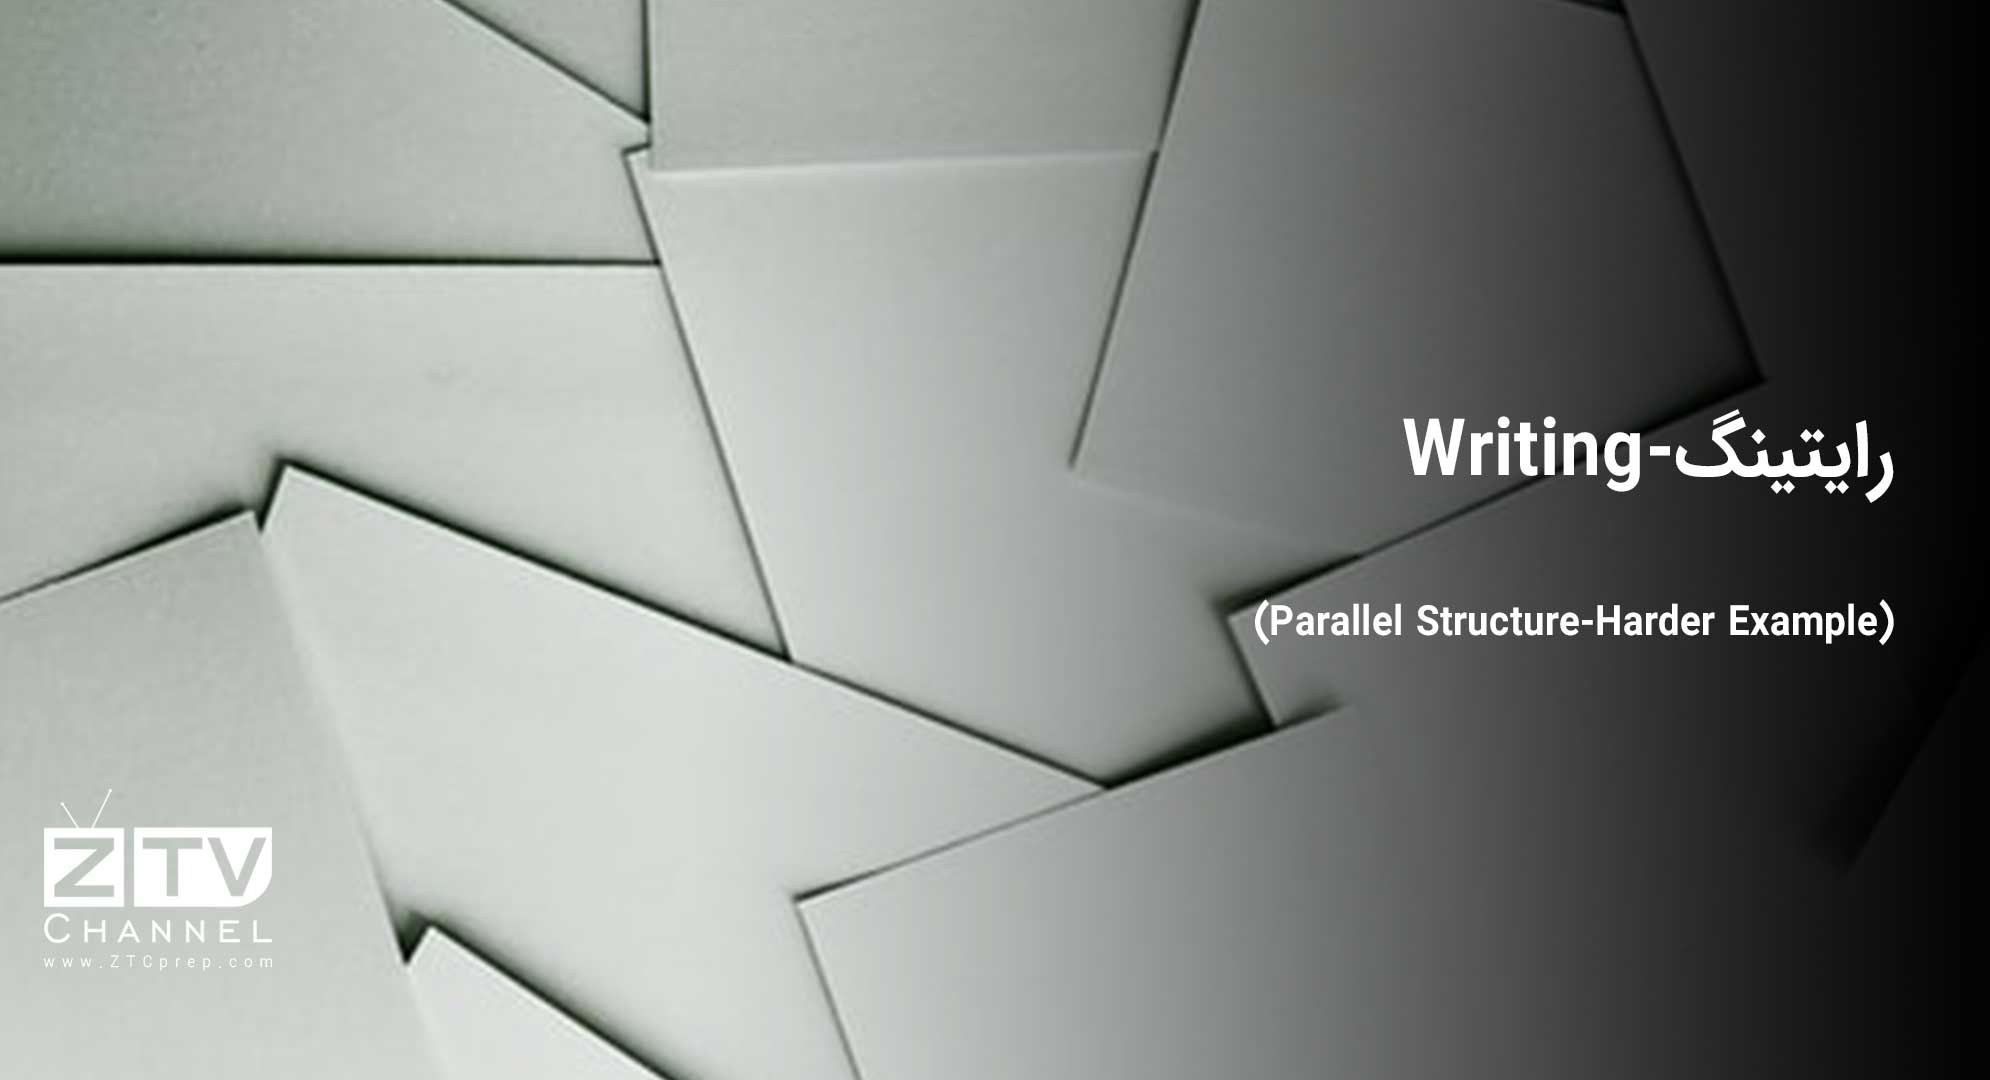 رایتینگ - (Writing (Parallel Structure-Harder Example